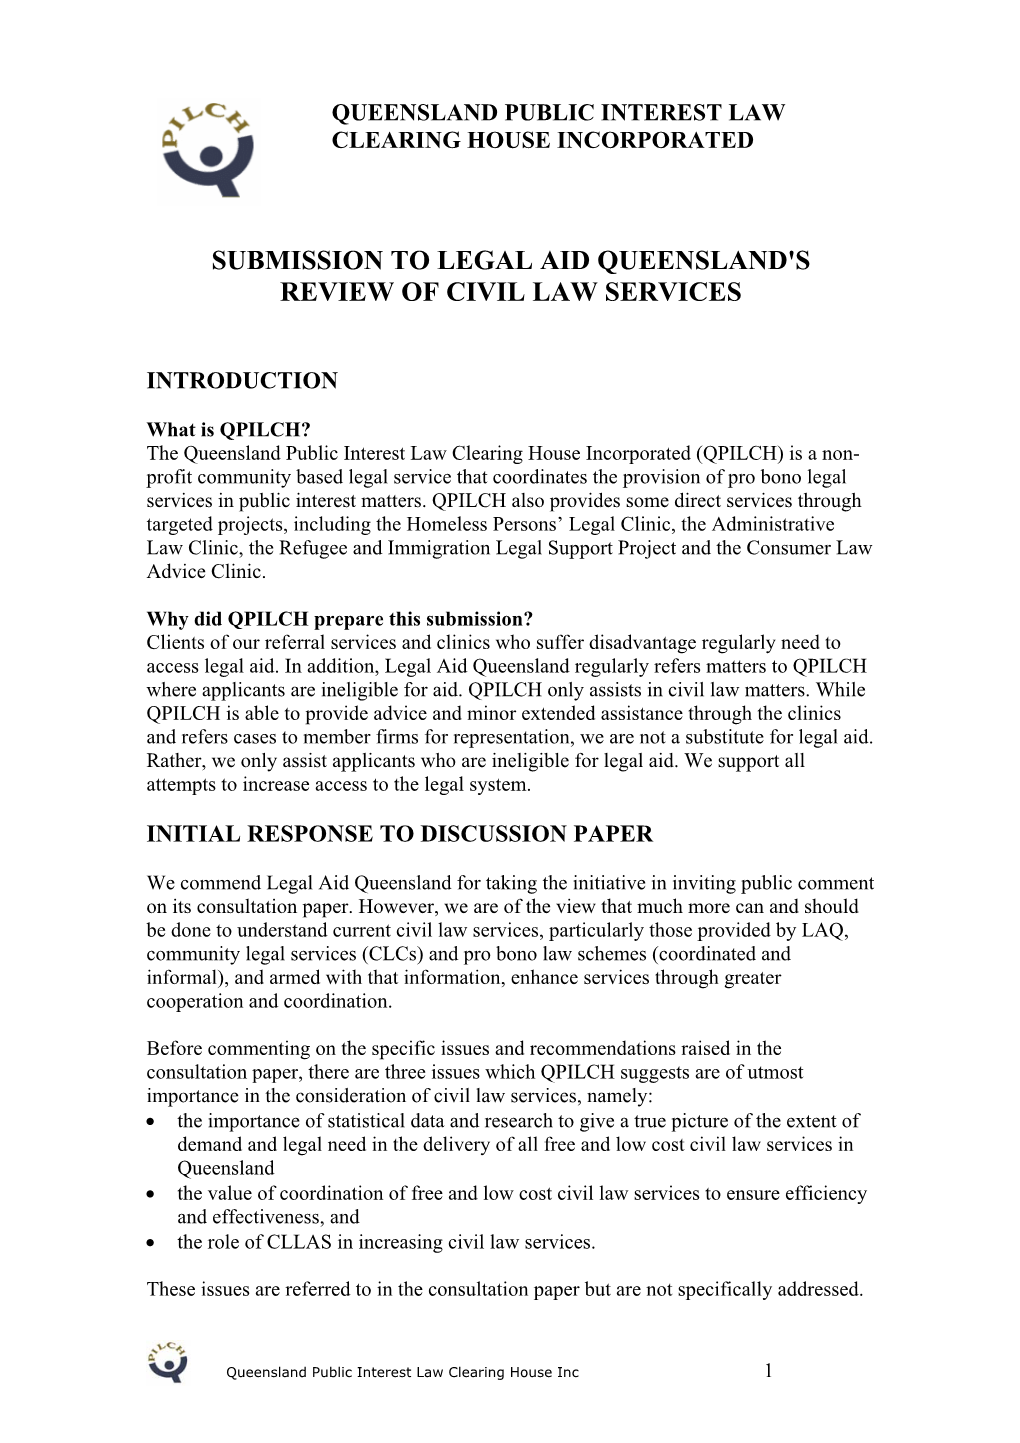 Legal Aid Queensland's Review of Civil Law Services (PDF